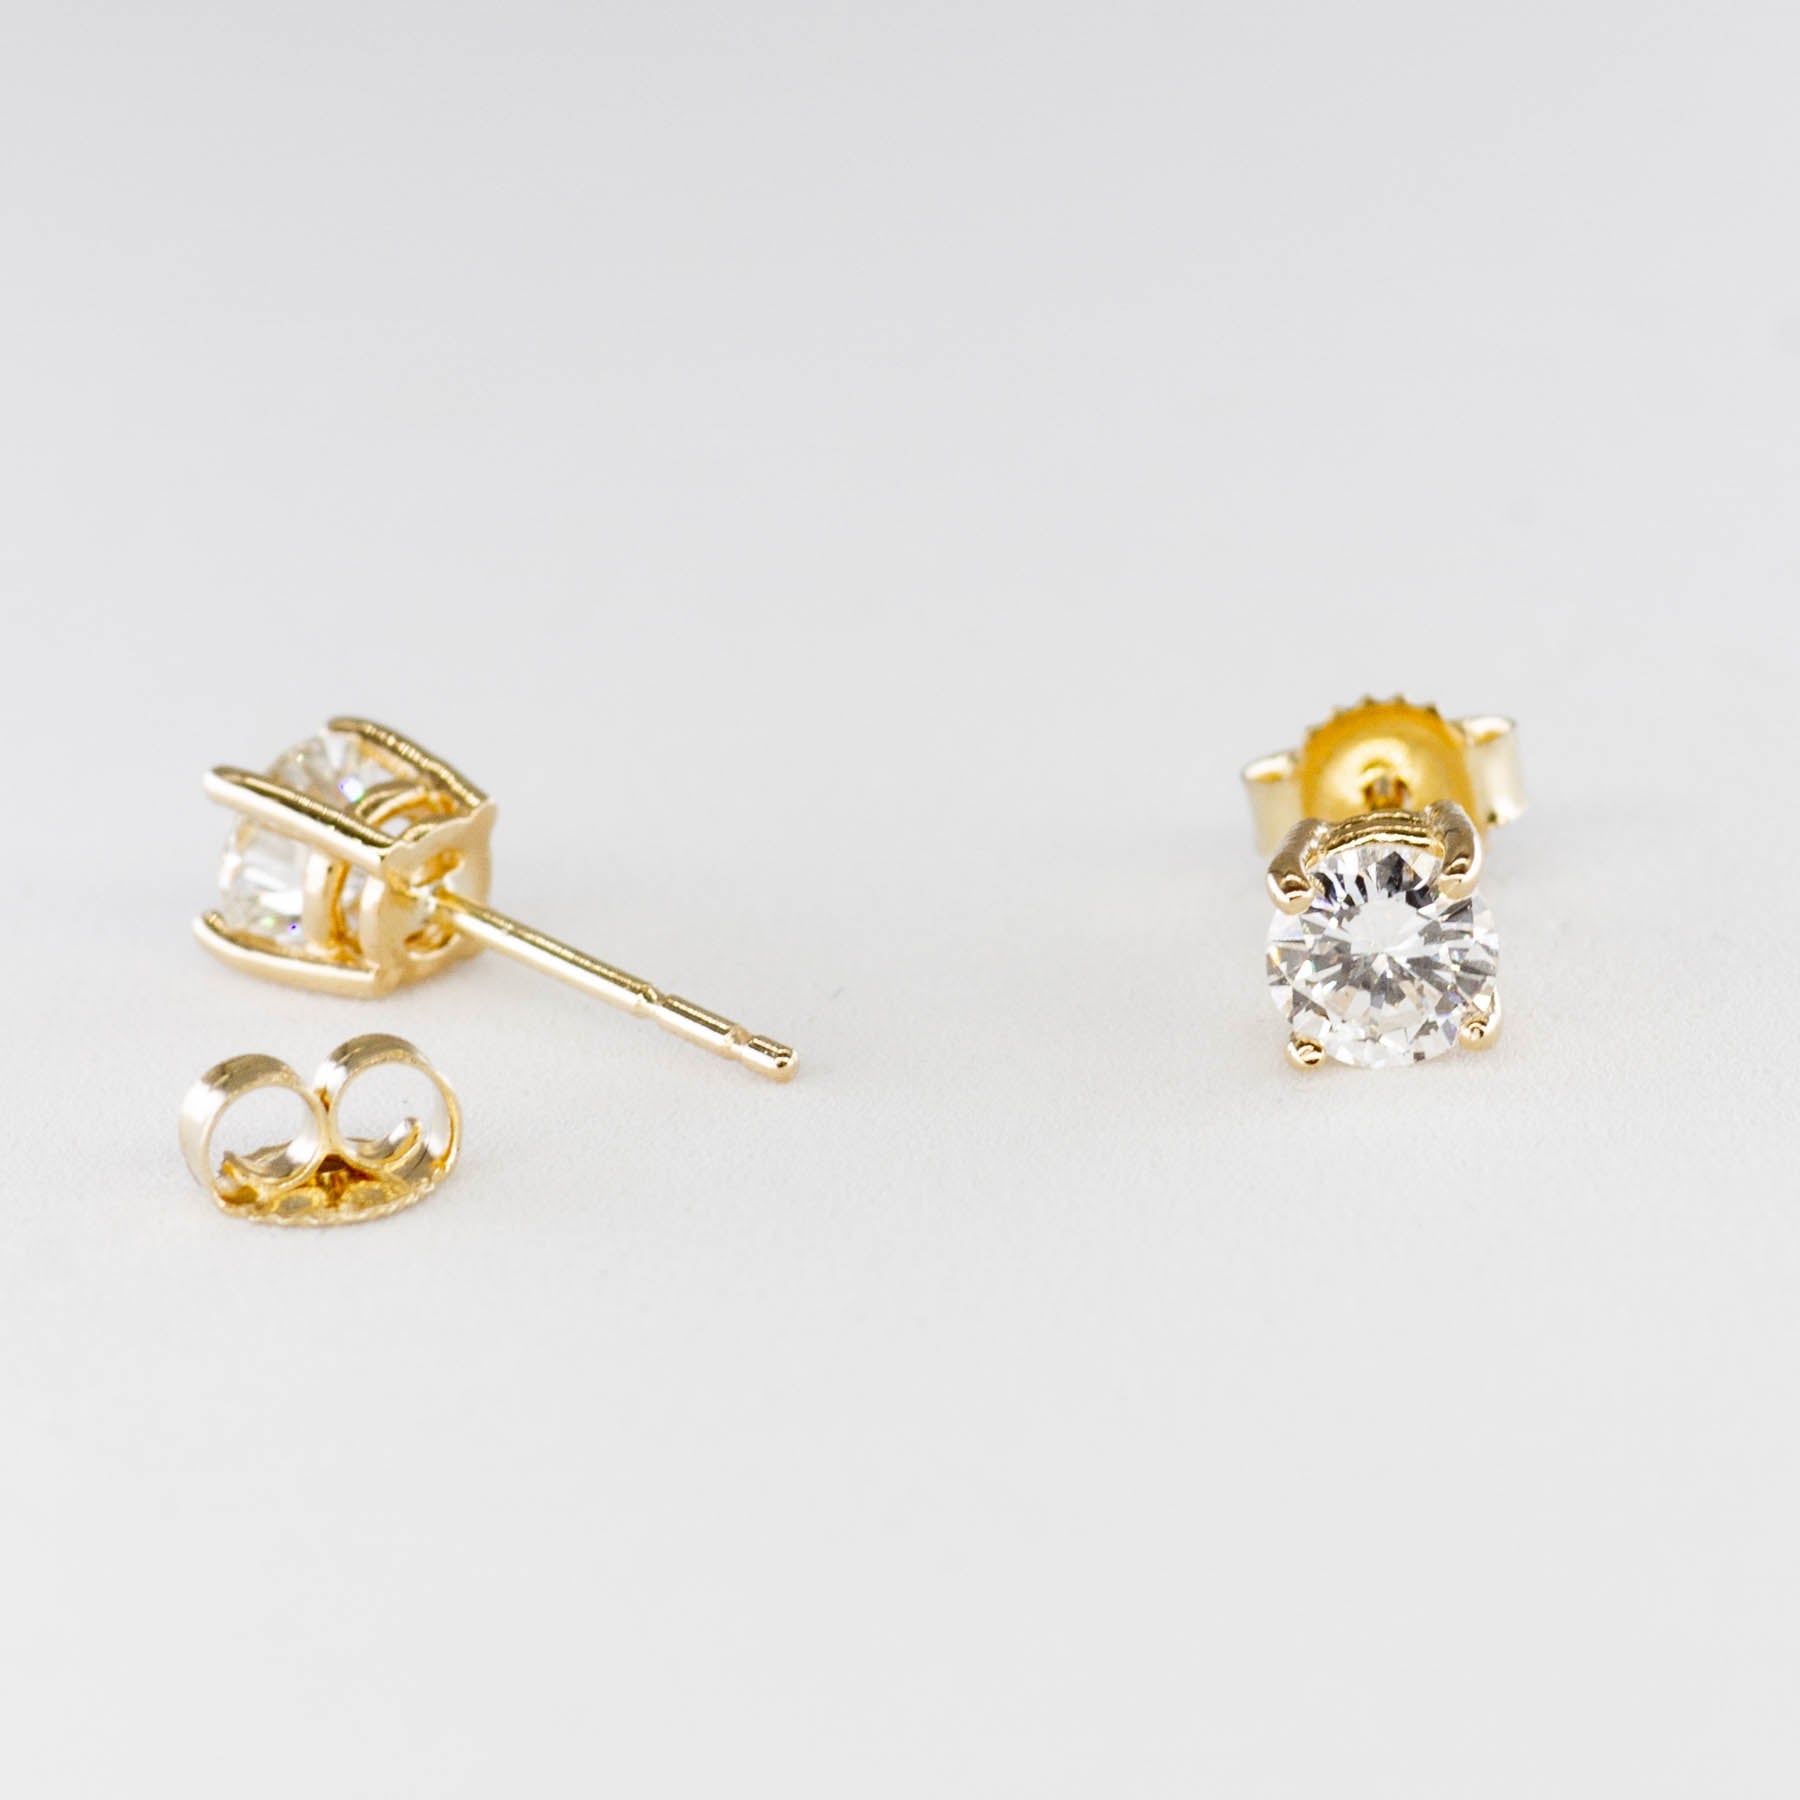 100 Ways Yellow Gold Diamond Studs | 0.66 ctw VS G/H | - 100 Ways